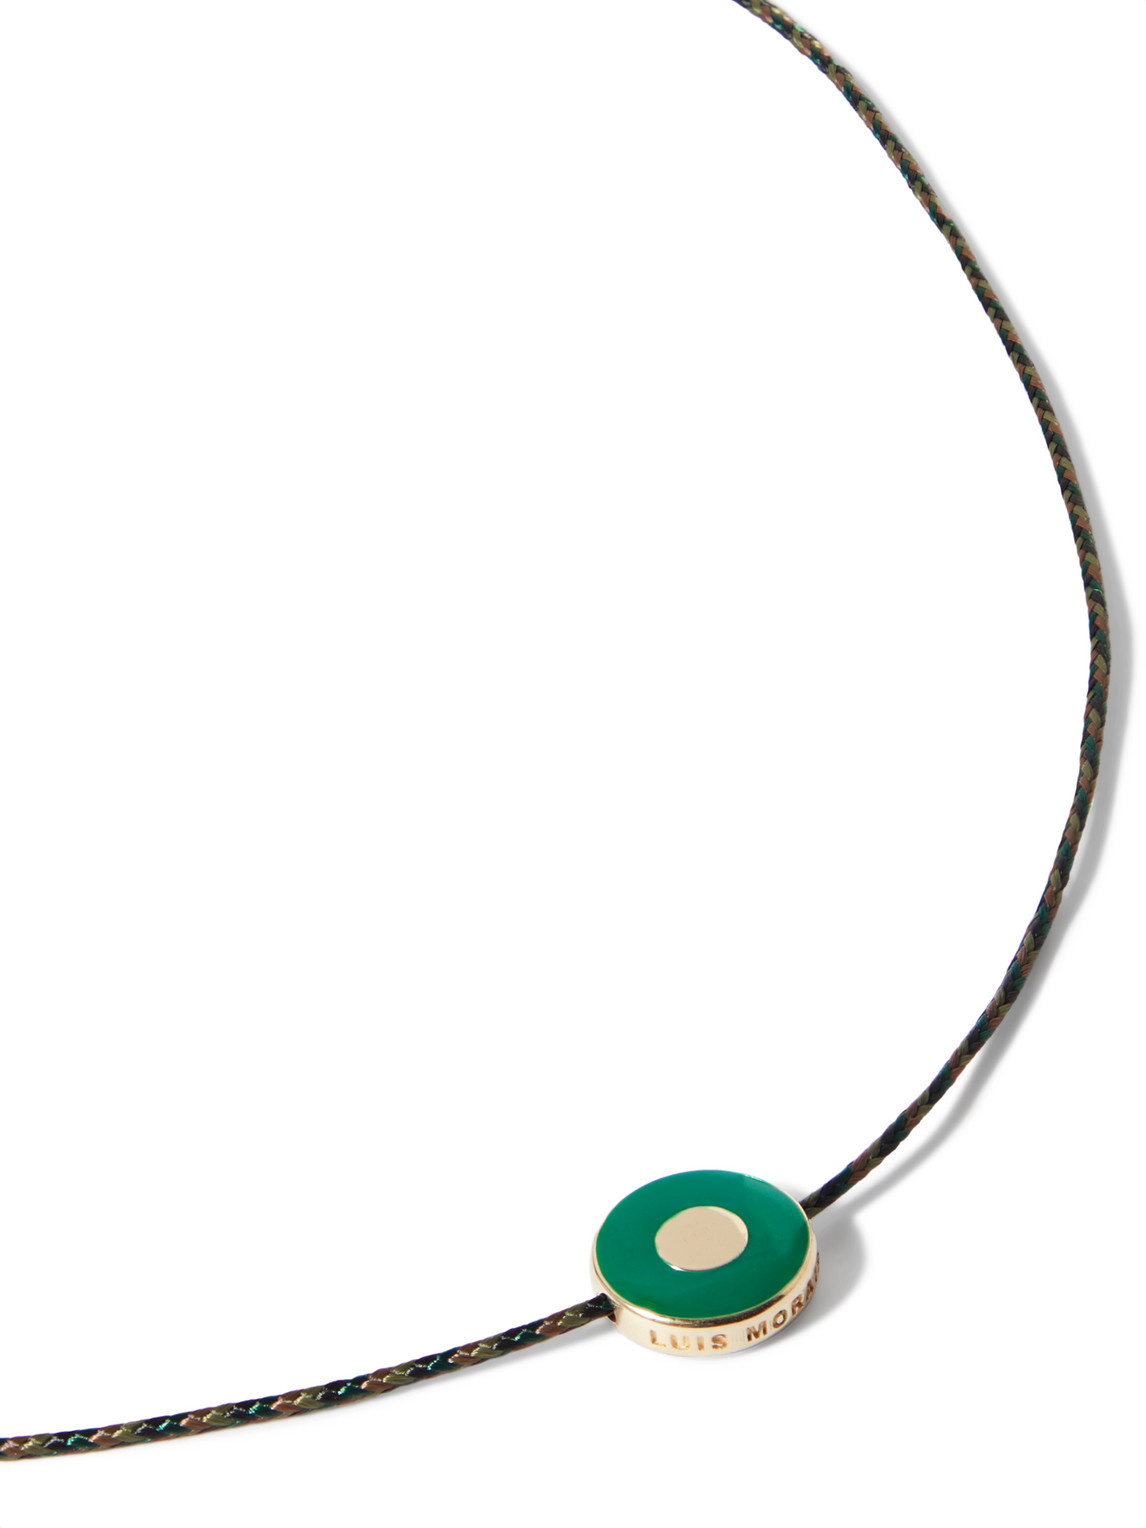 Luis Morais Gold, Enamel And Cord Bracelet In Green